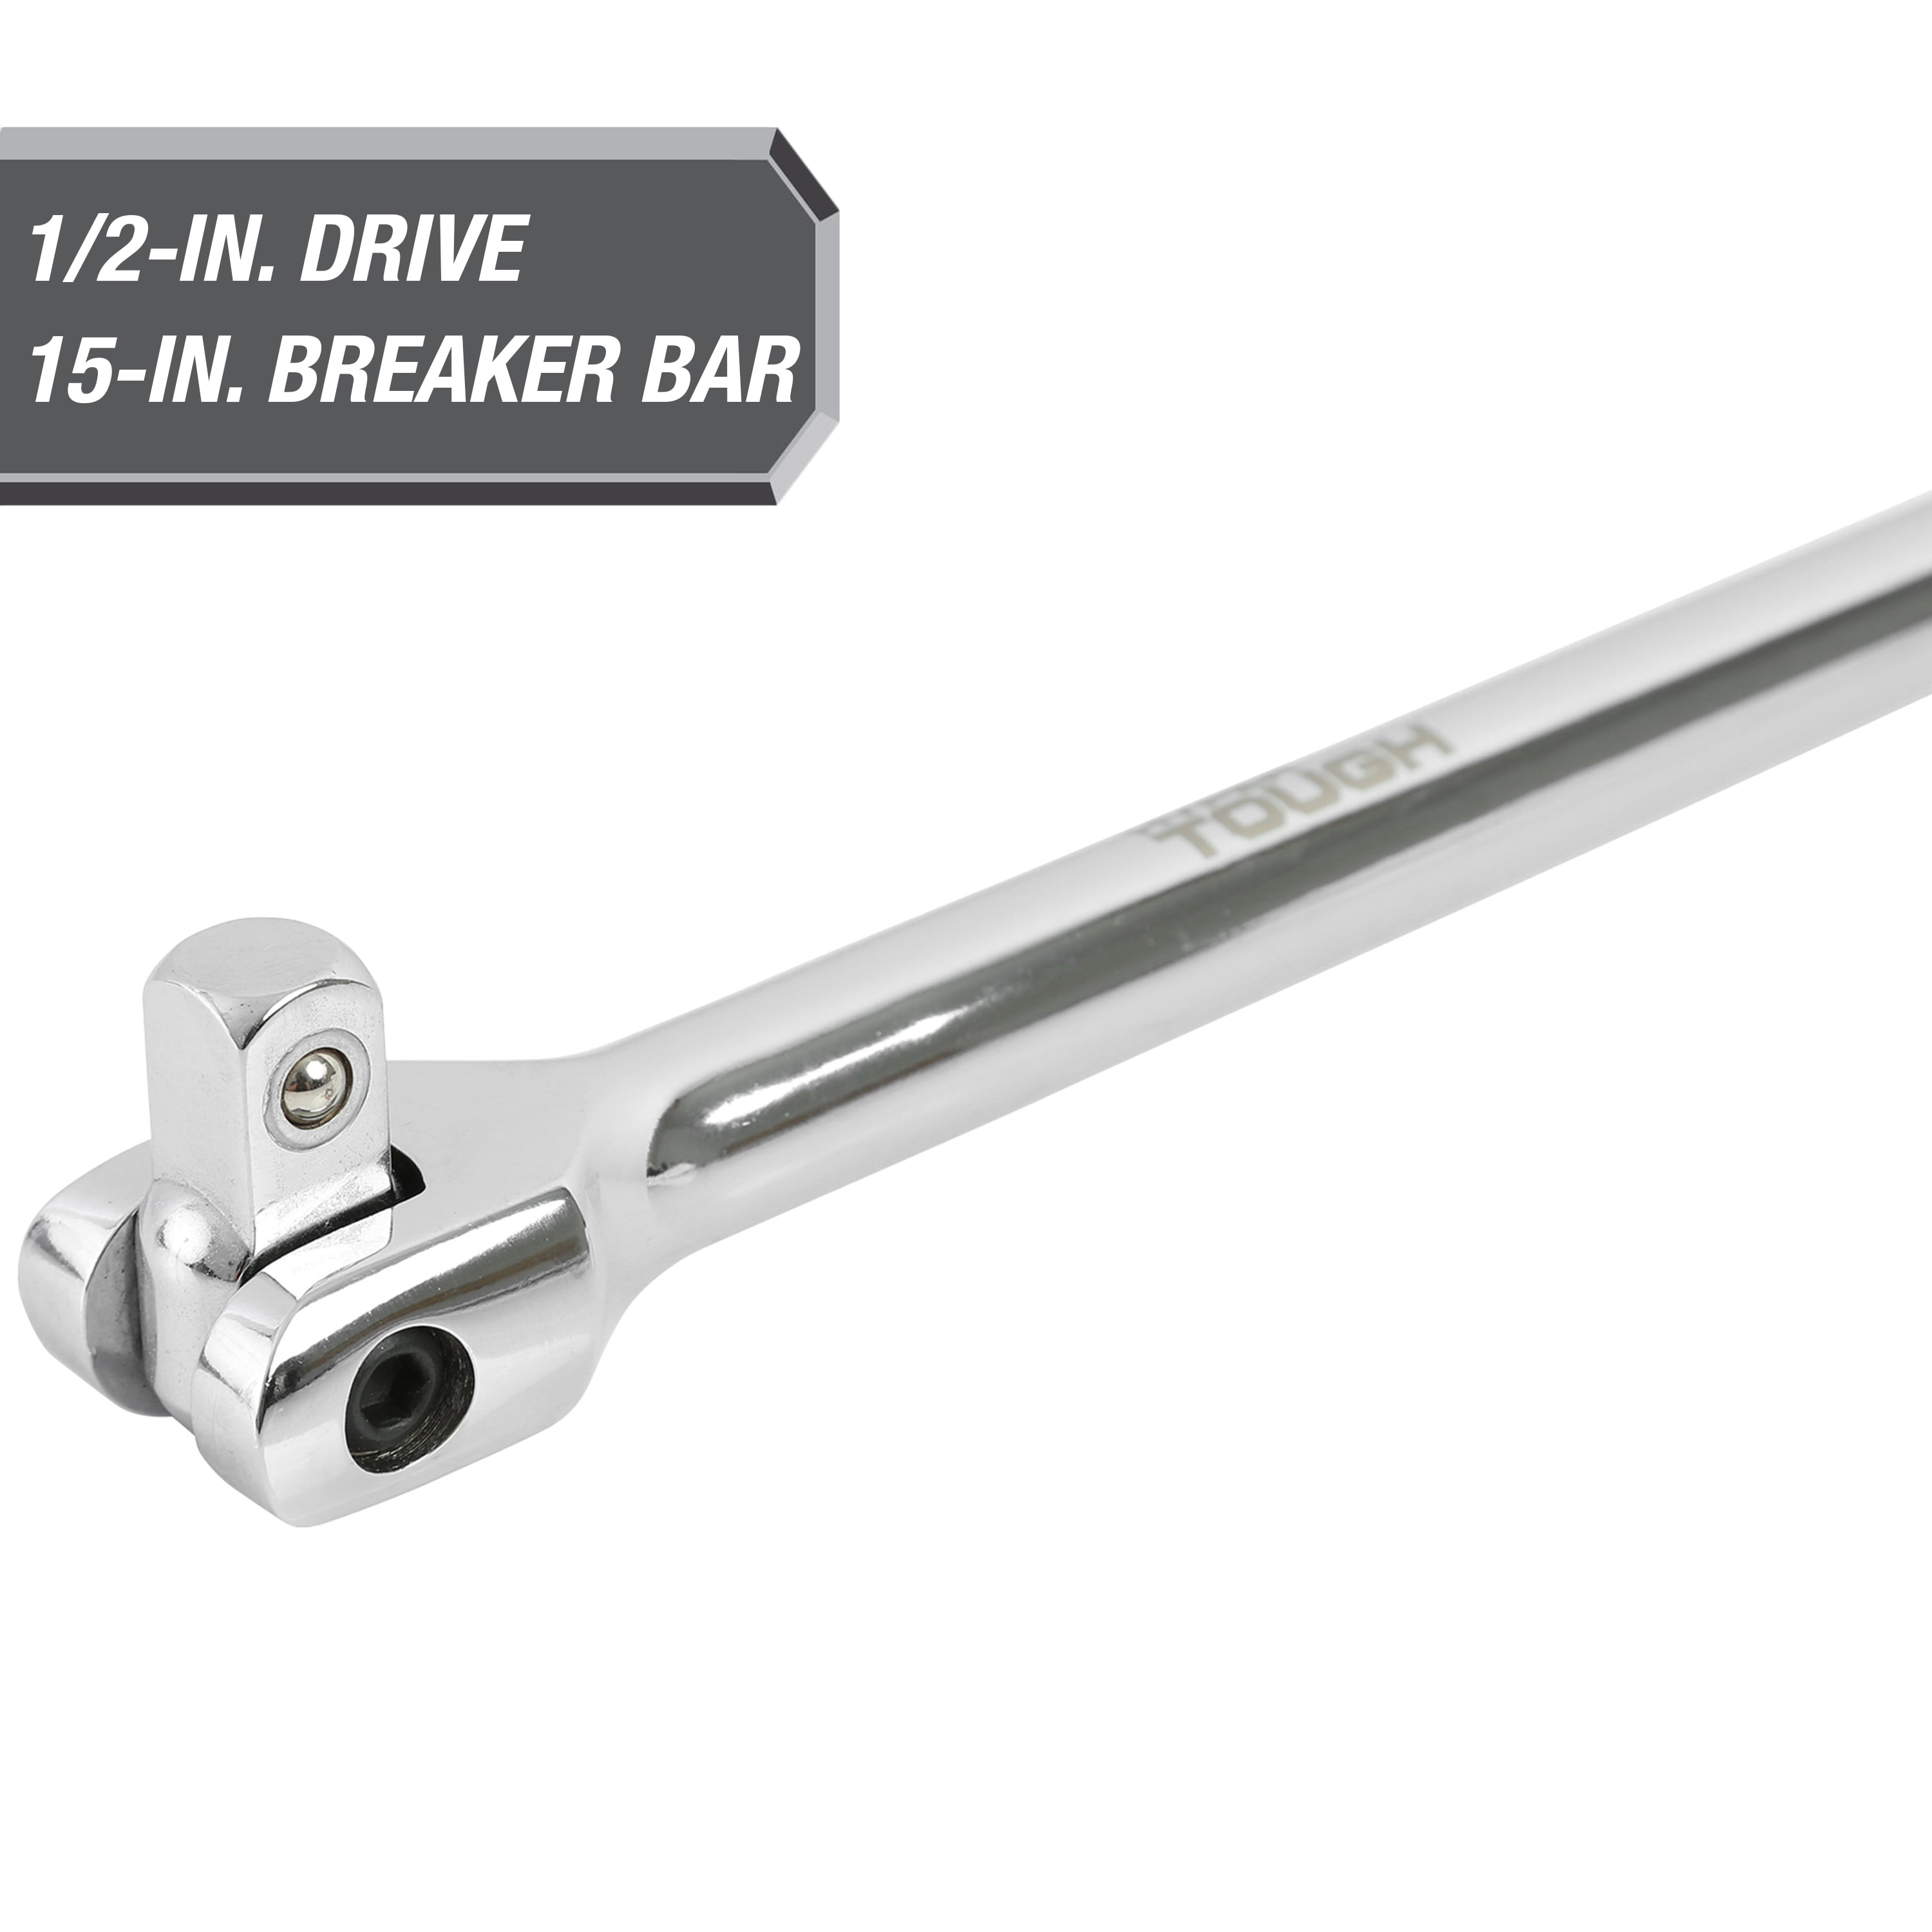 Drive Breaker Bar Flexible Handle Socket Wrench Tool Rotating Head 